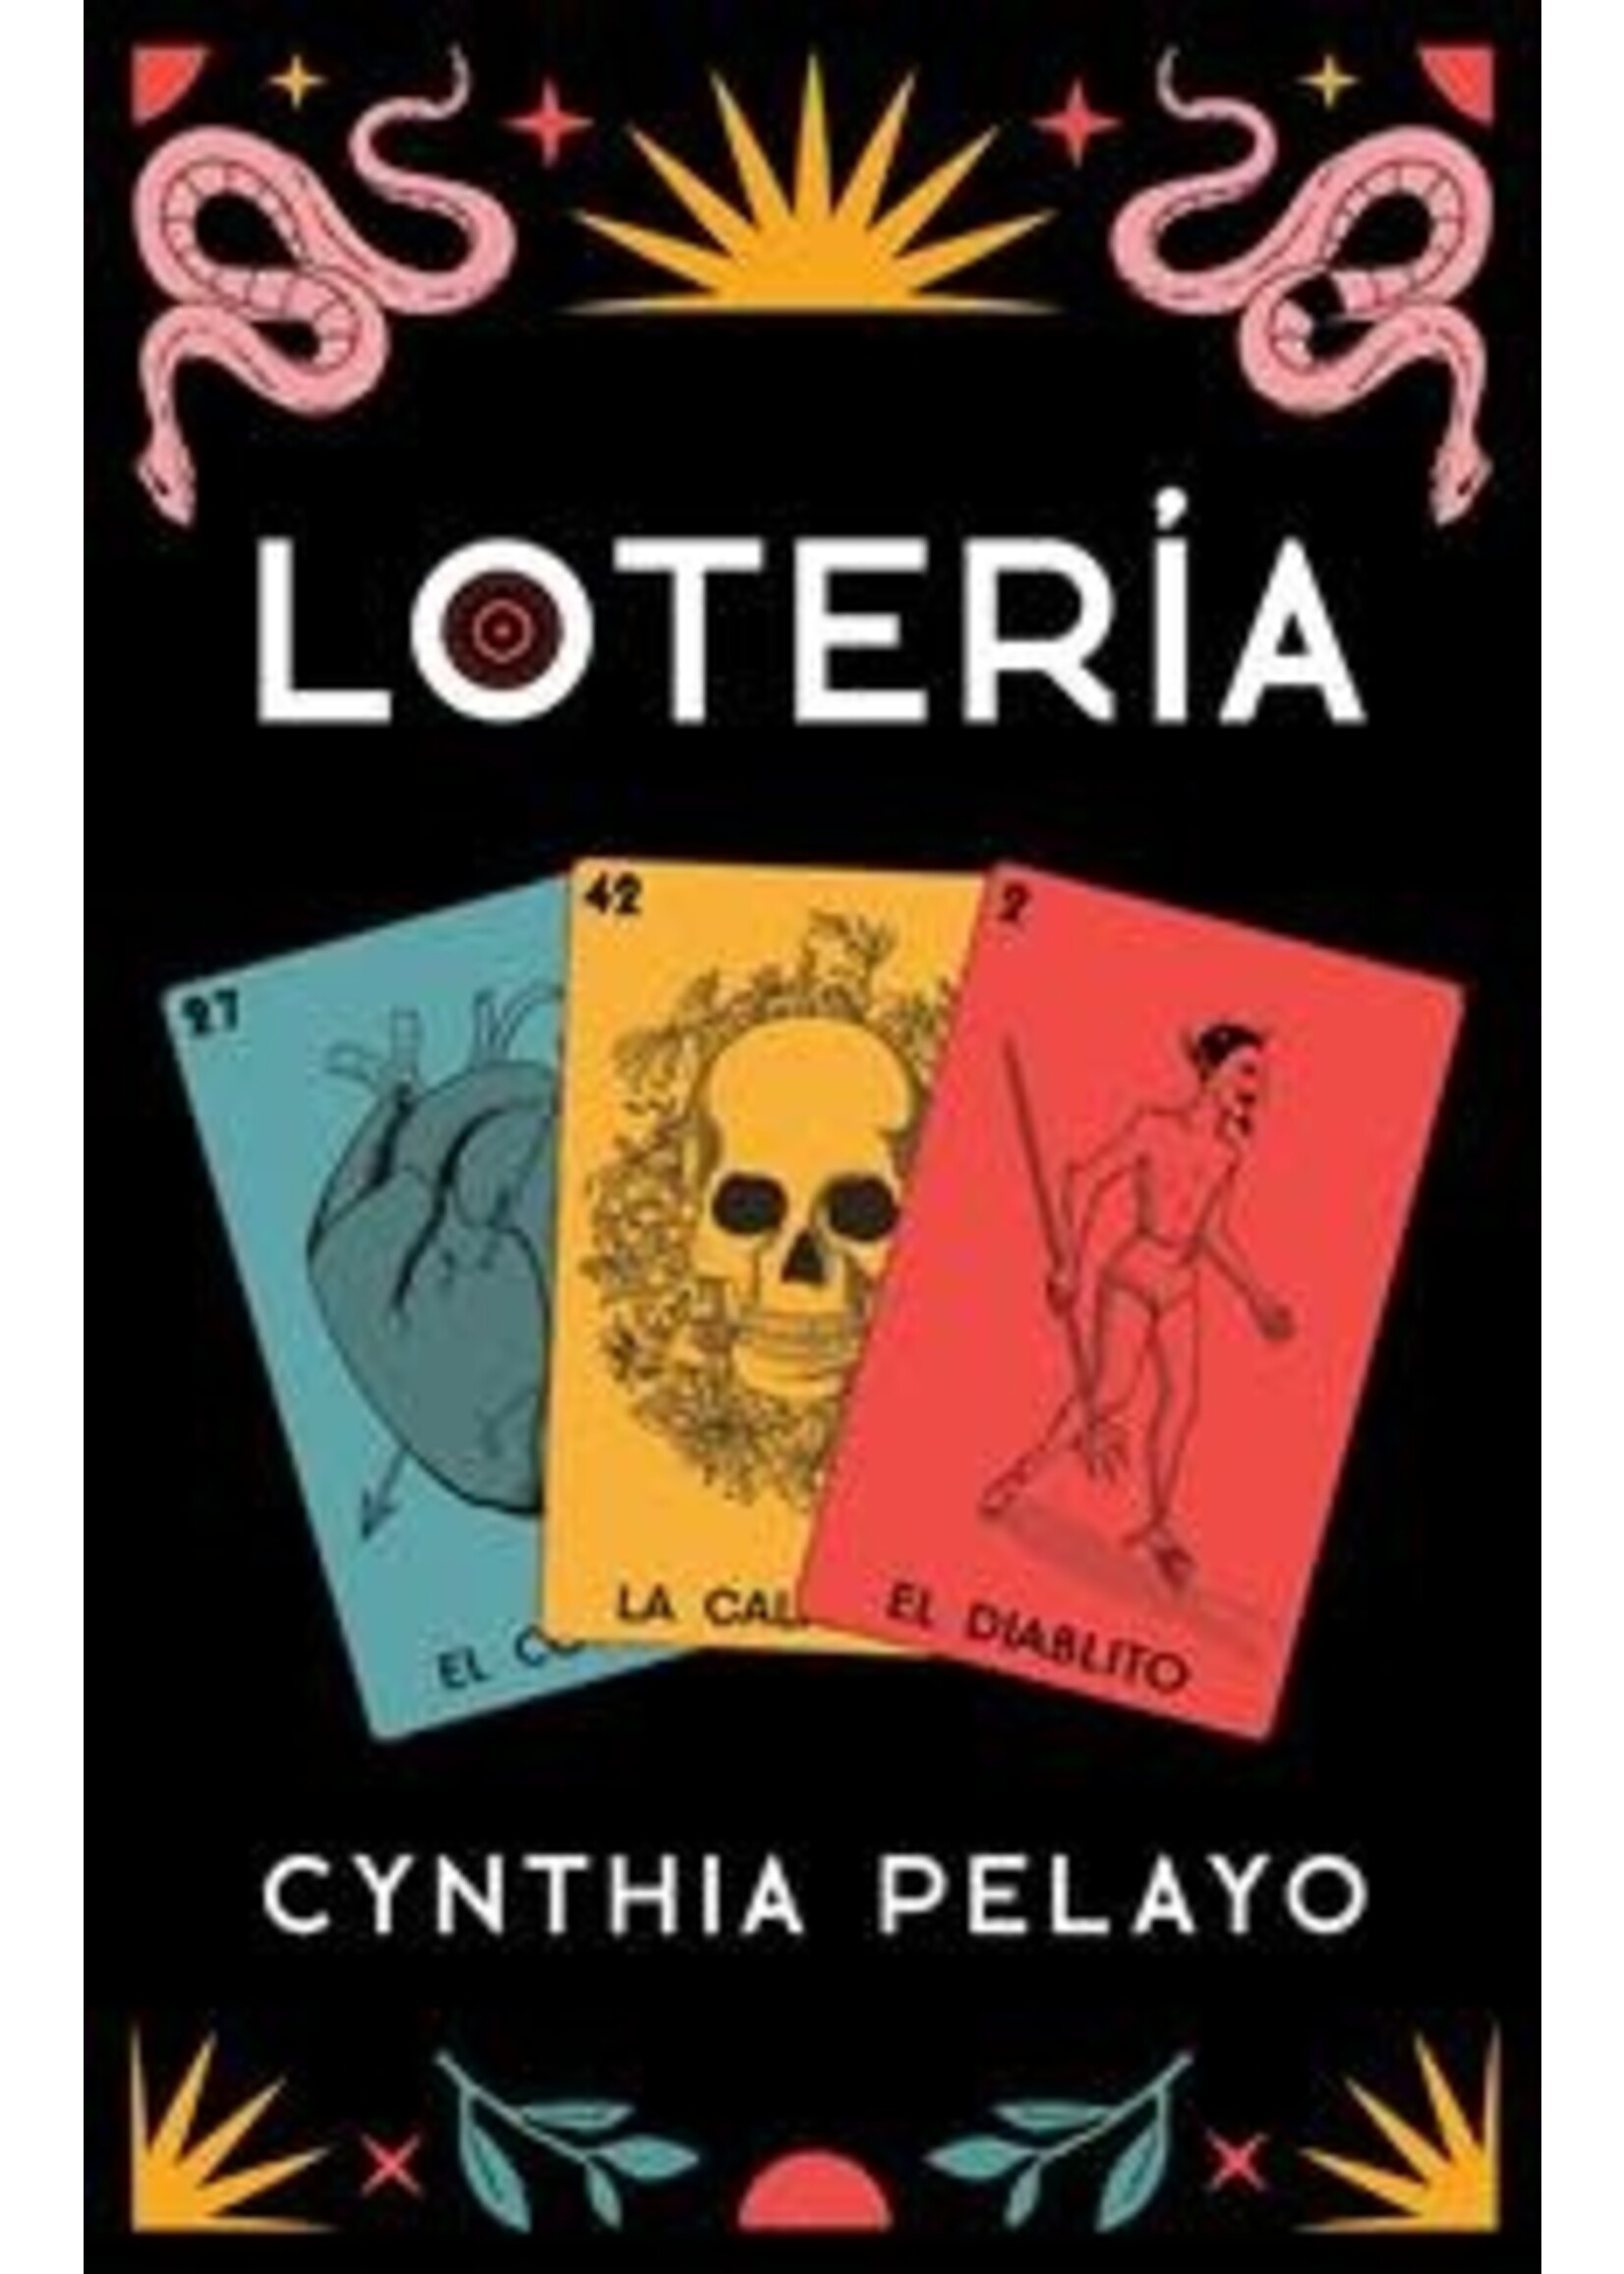 Loteria by Cynthia Pelayo